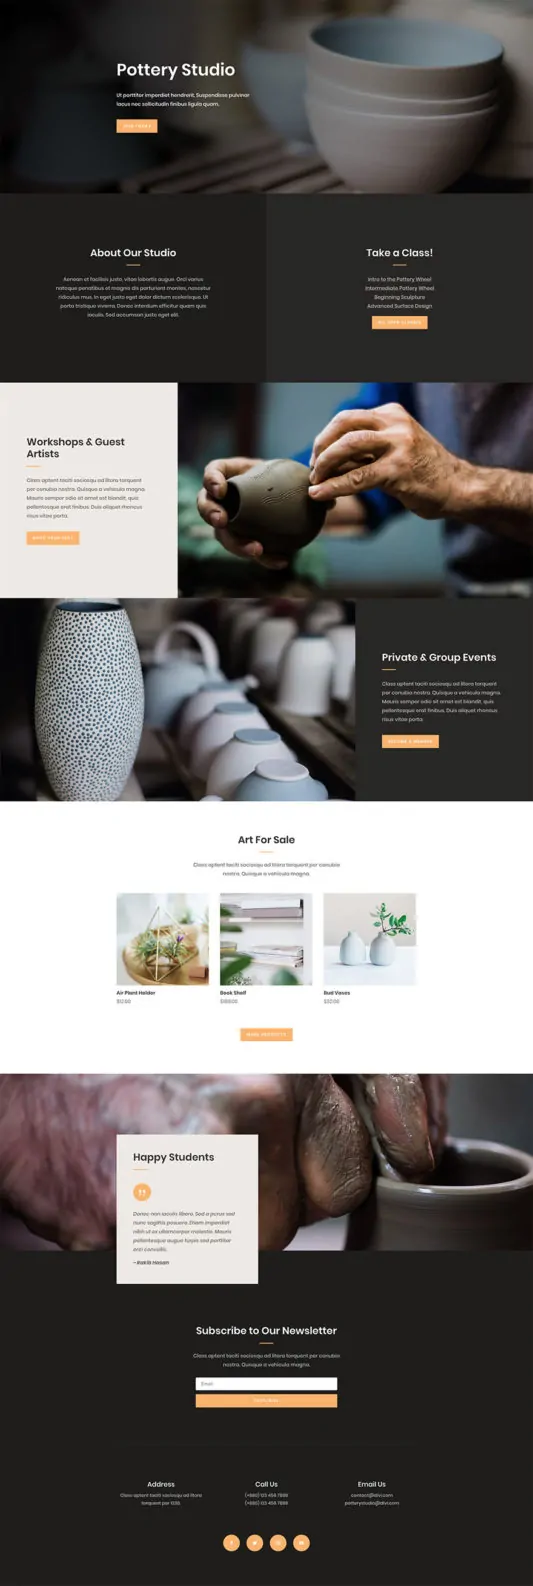 Pottery Studio Web Design 8